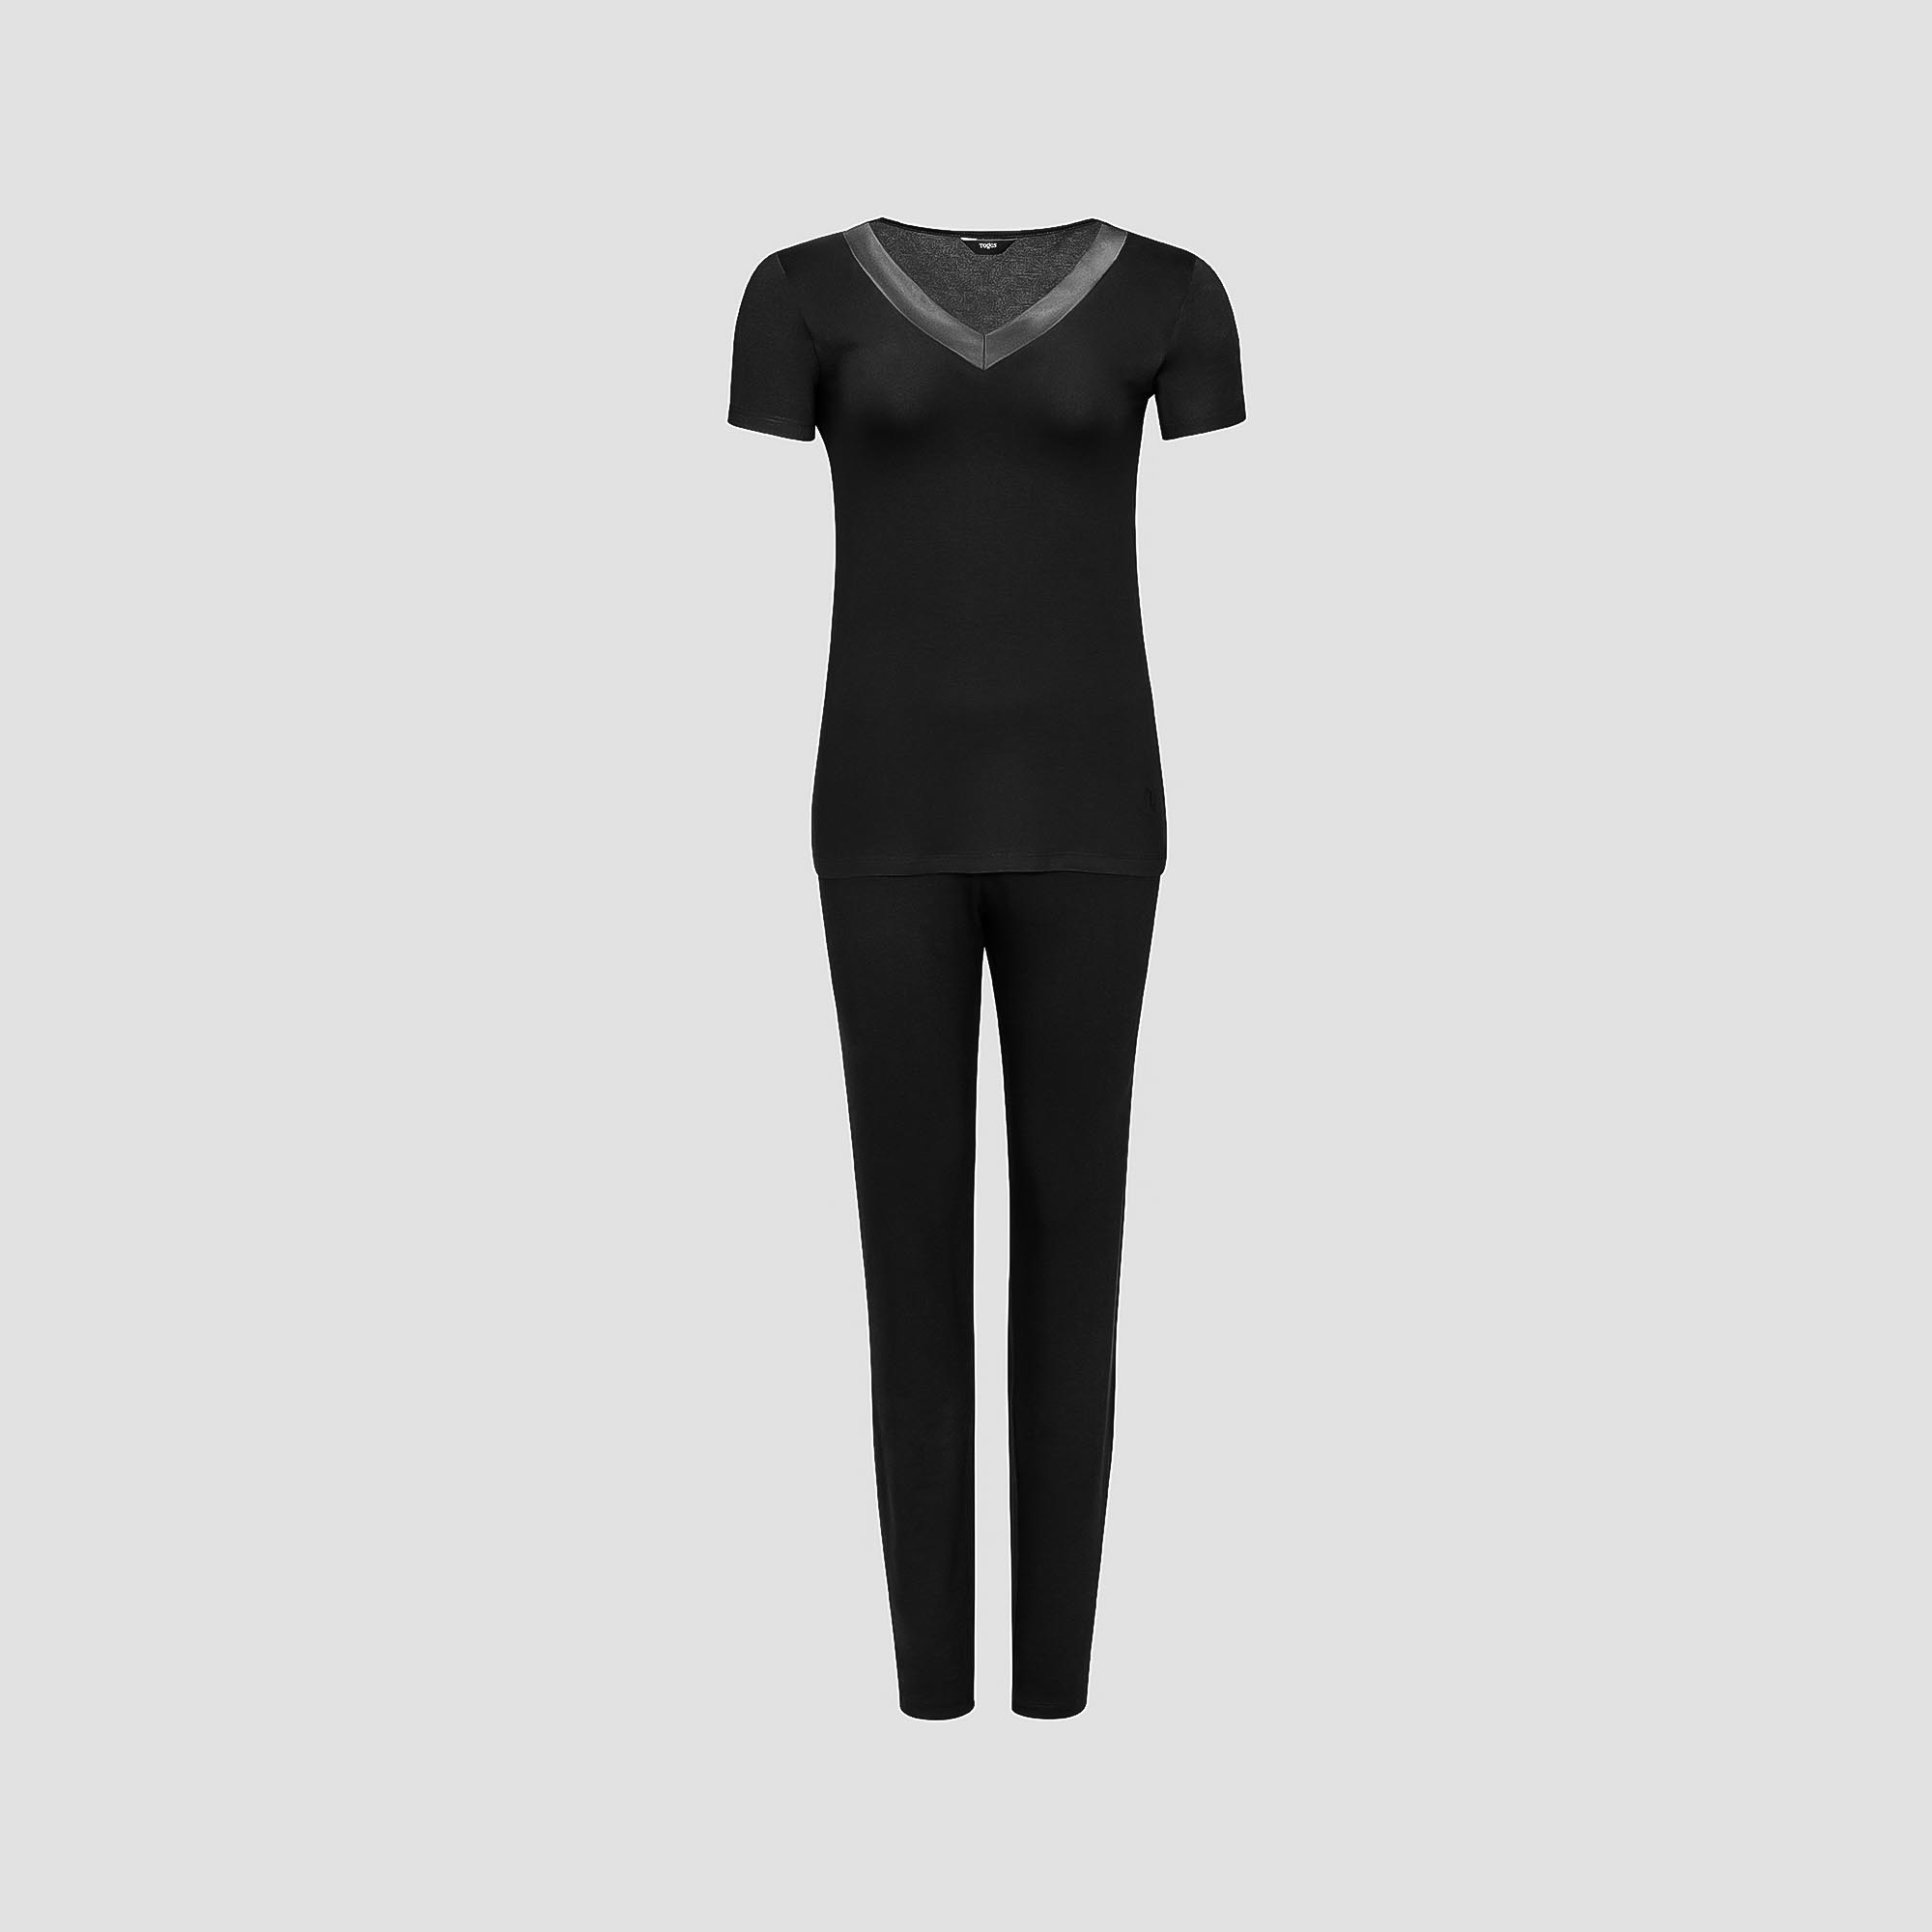 Пижама Togas Ингелла черная женская L(48) 2 предмета пижама футболка брюки